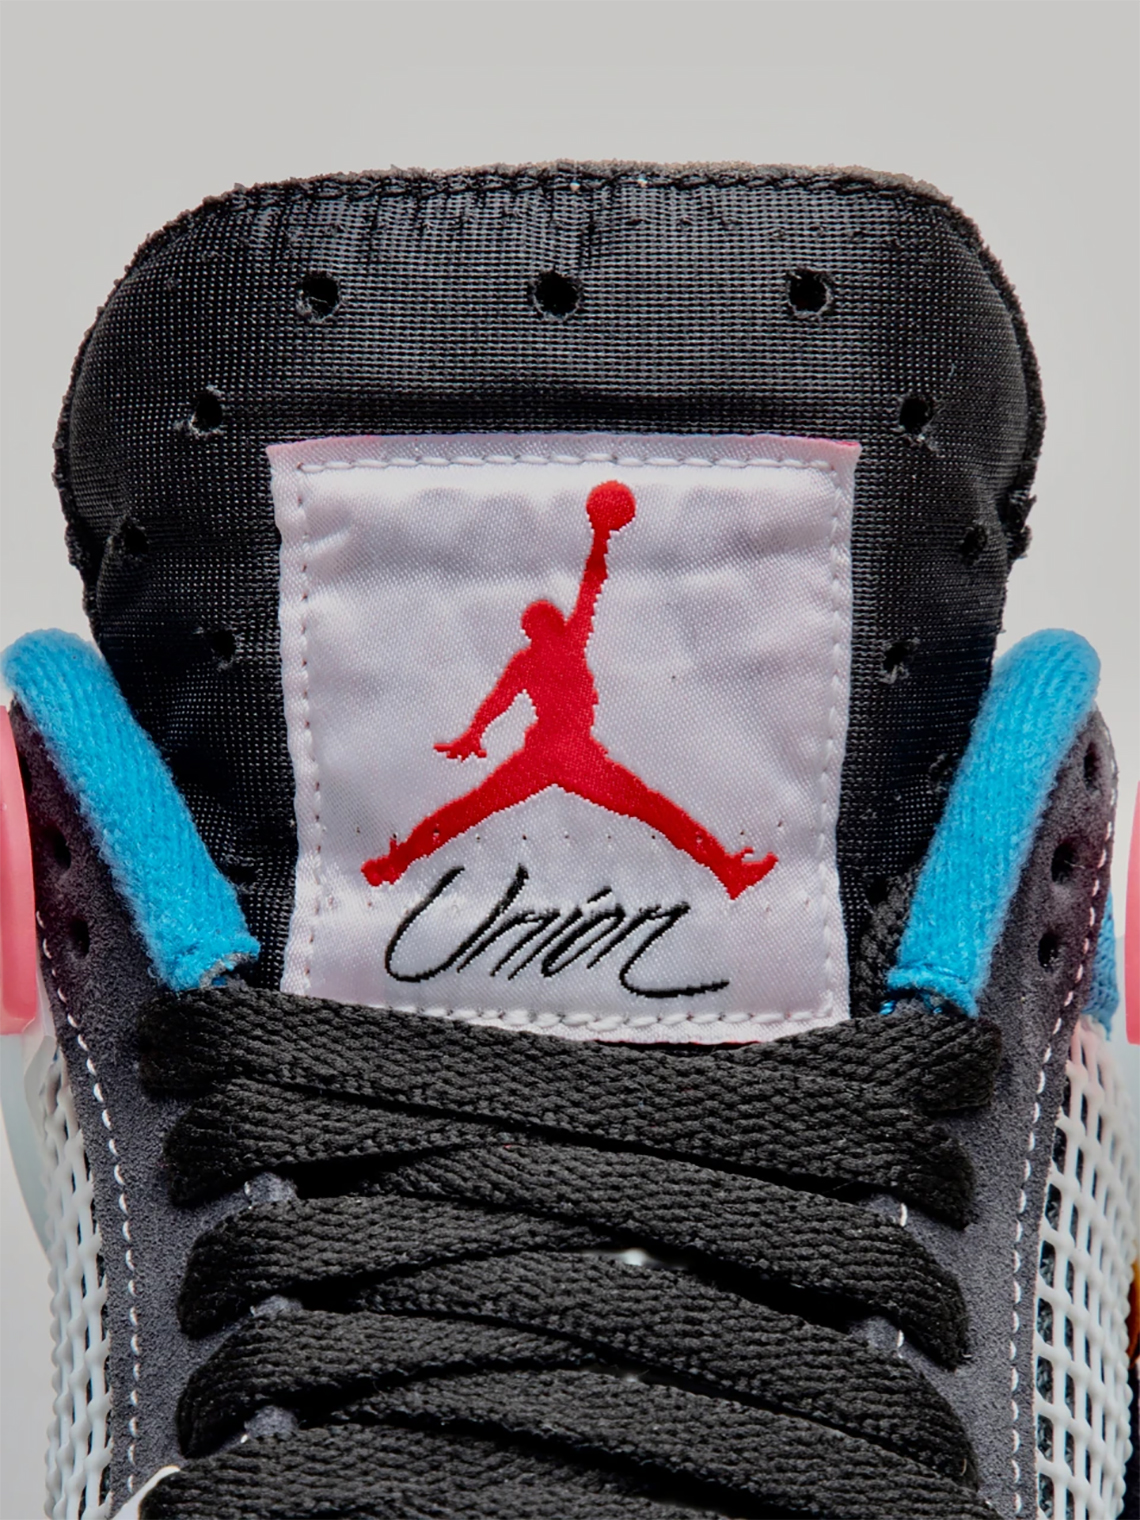 kickscorner_ng - Air Jordan 4 'Union' “Custom Blue” Size